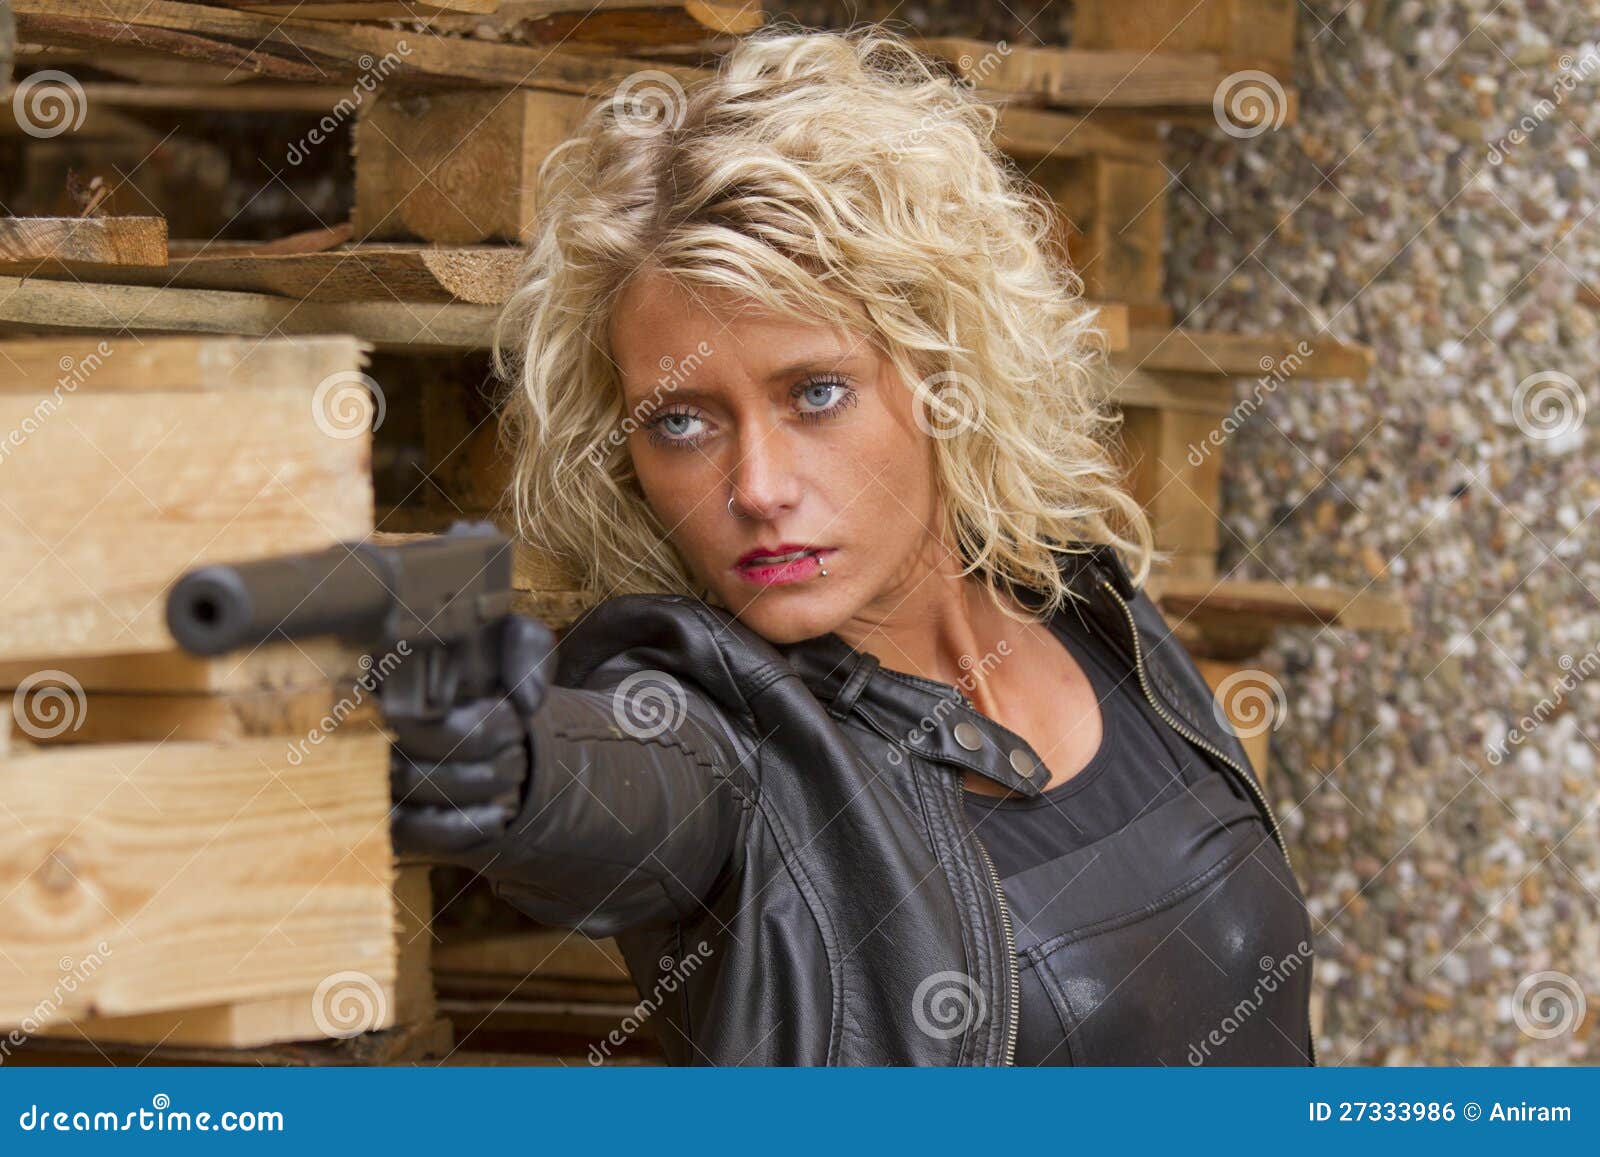 woman with silencer gun